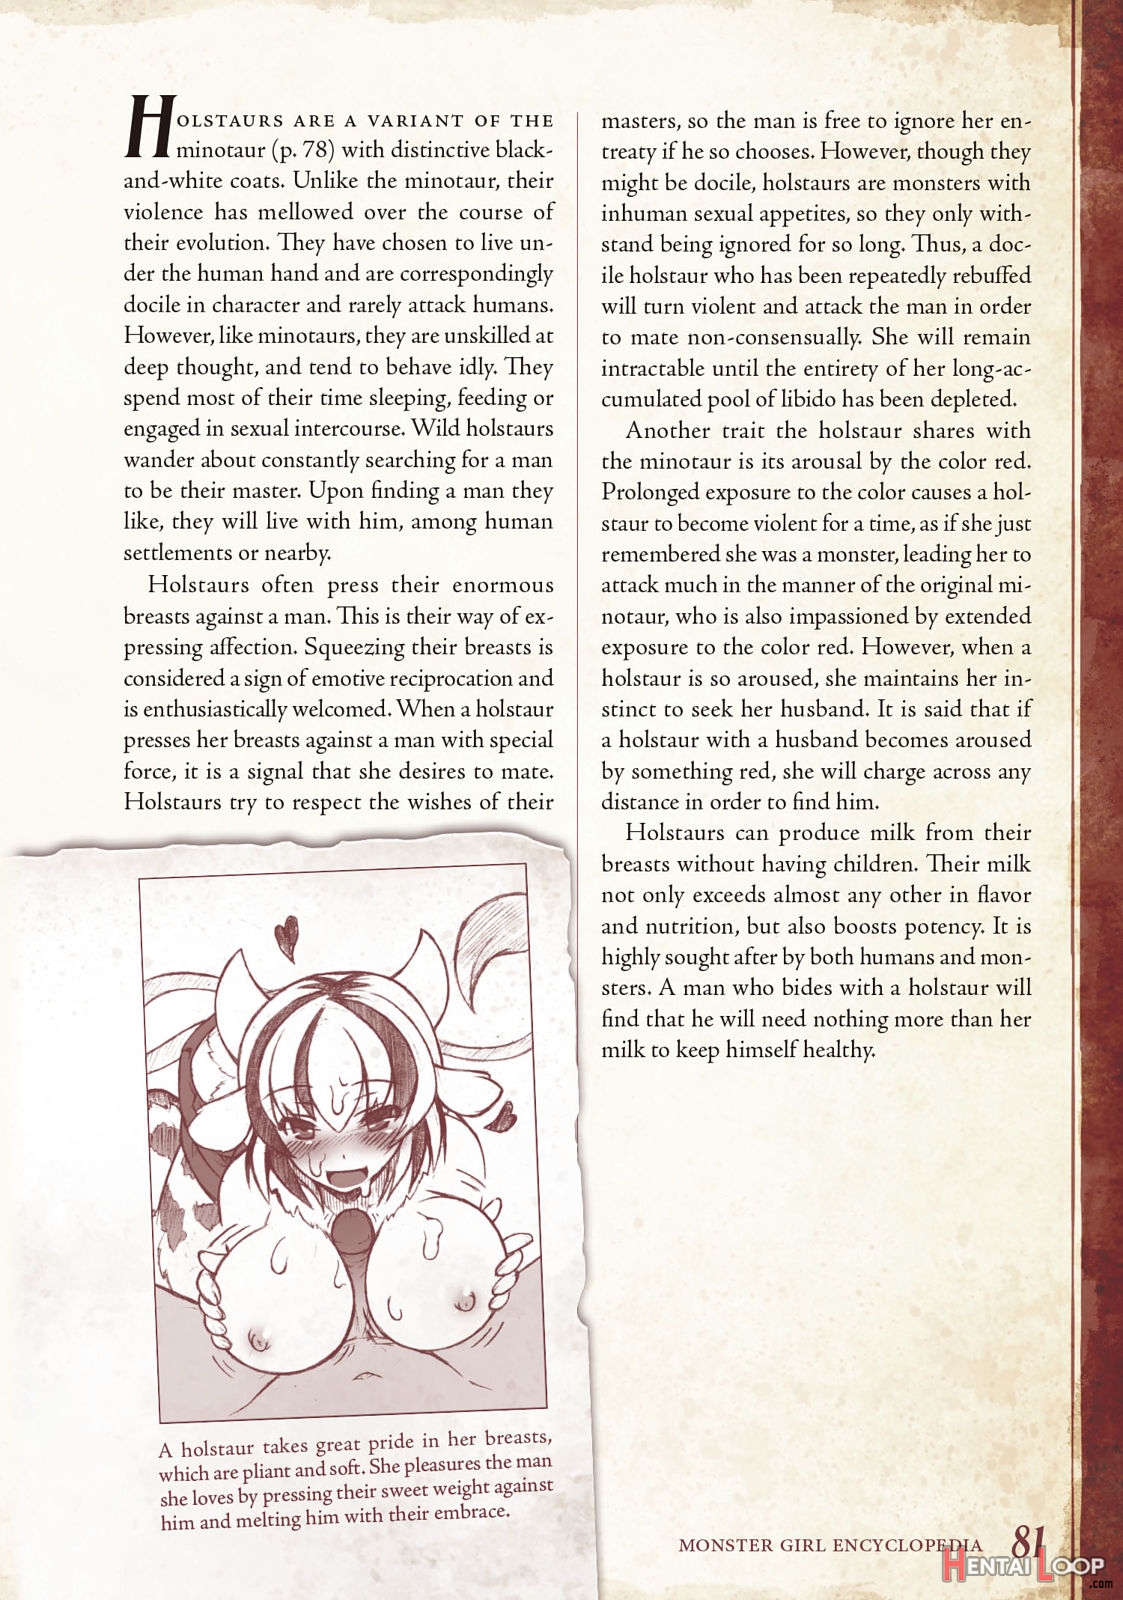 Monster Girl Encyclopedia Vol. 1 page 82